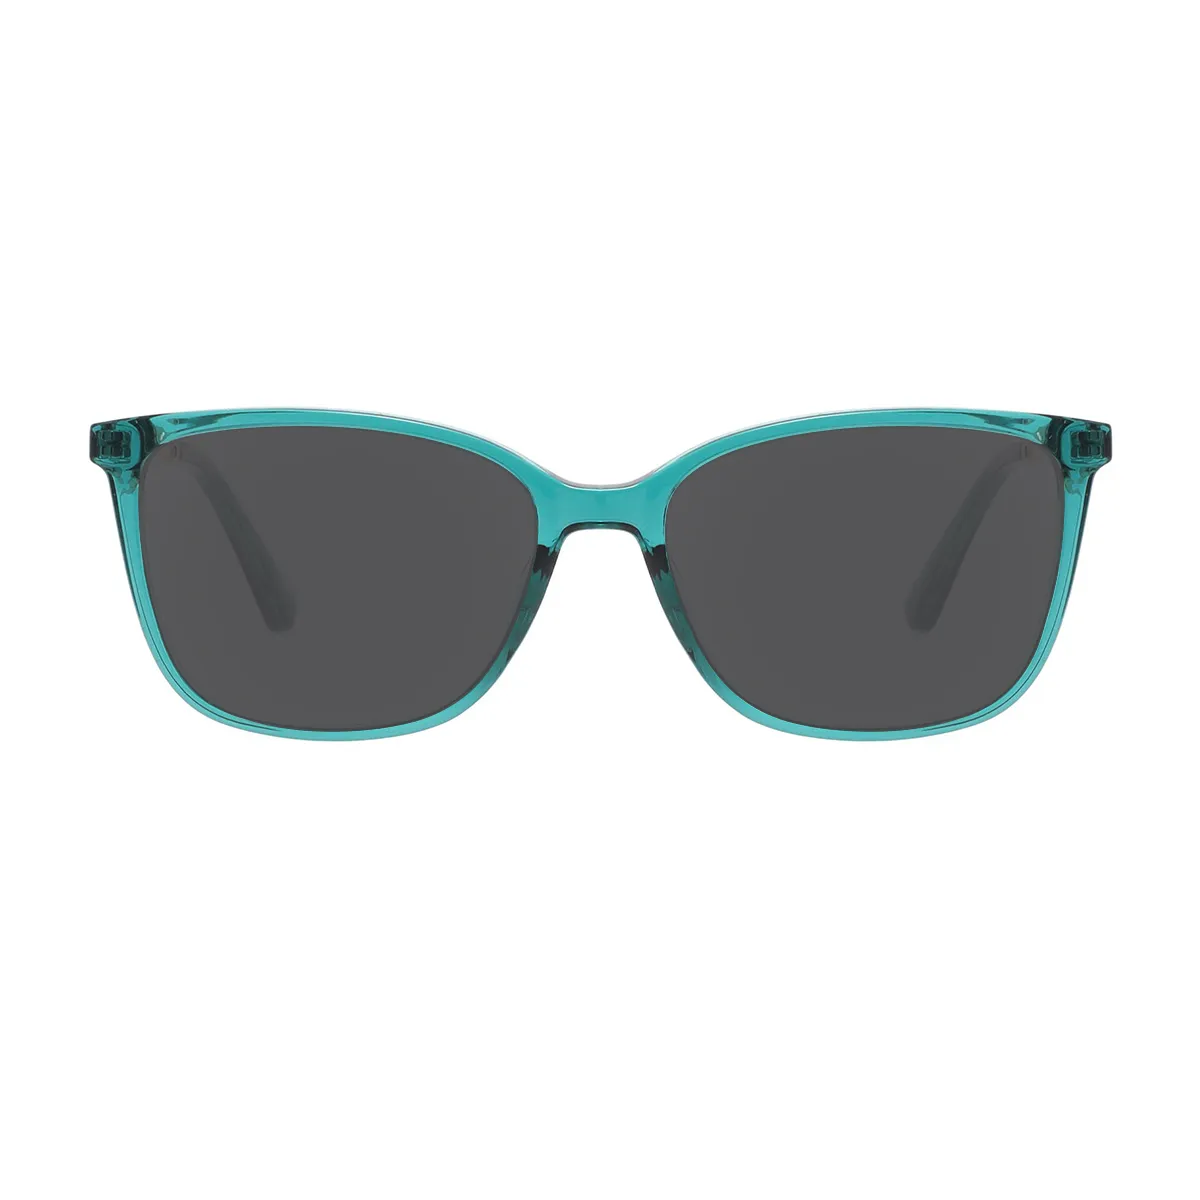 Way Square Black  Sunglasses for Women & Men